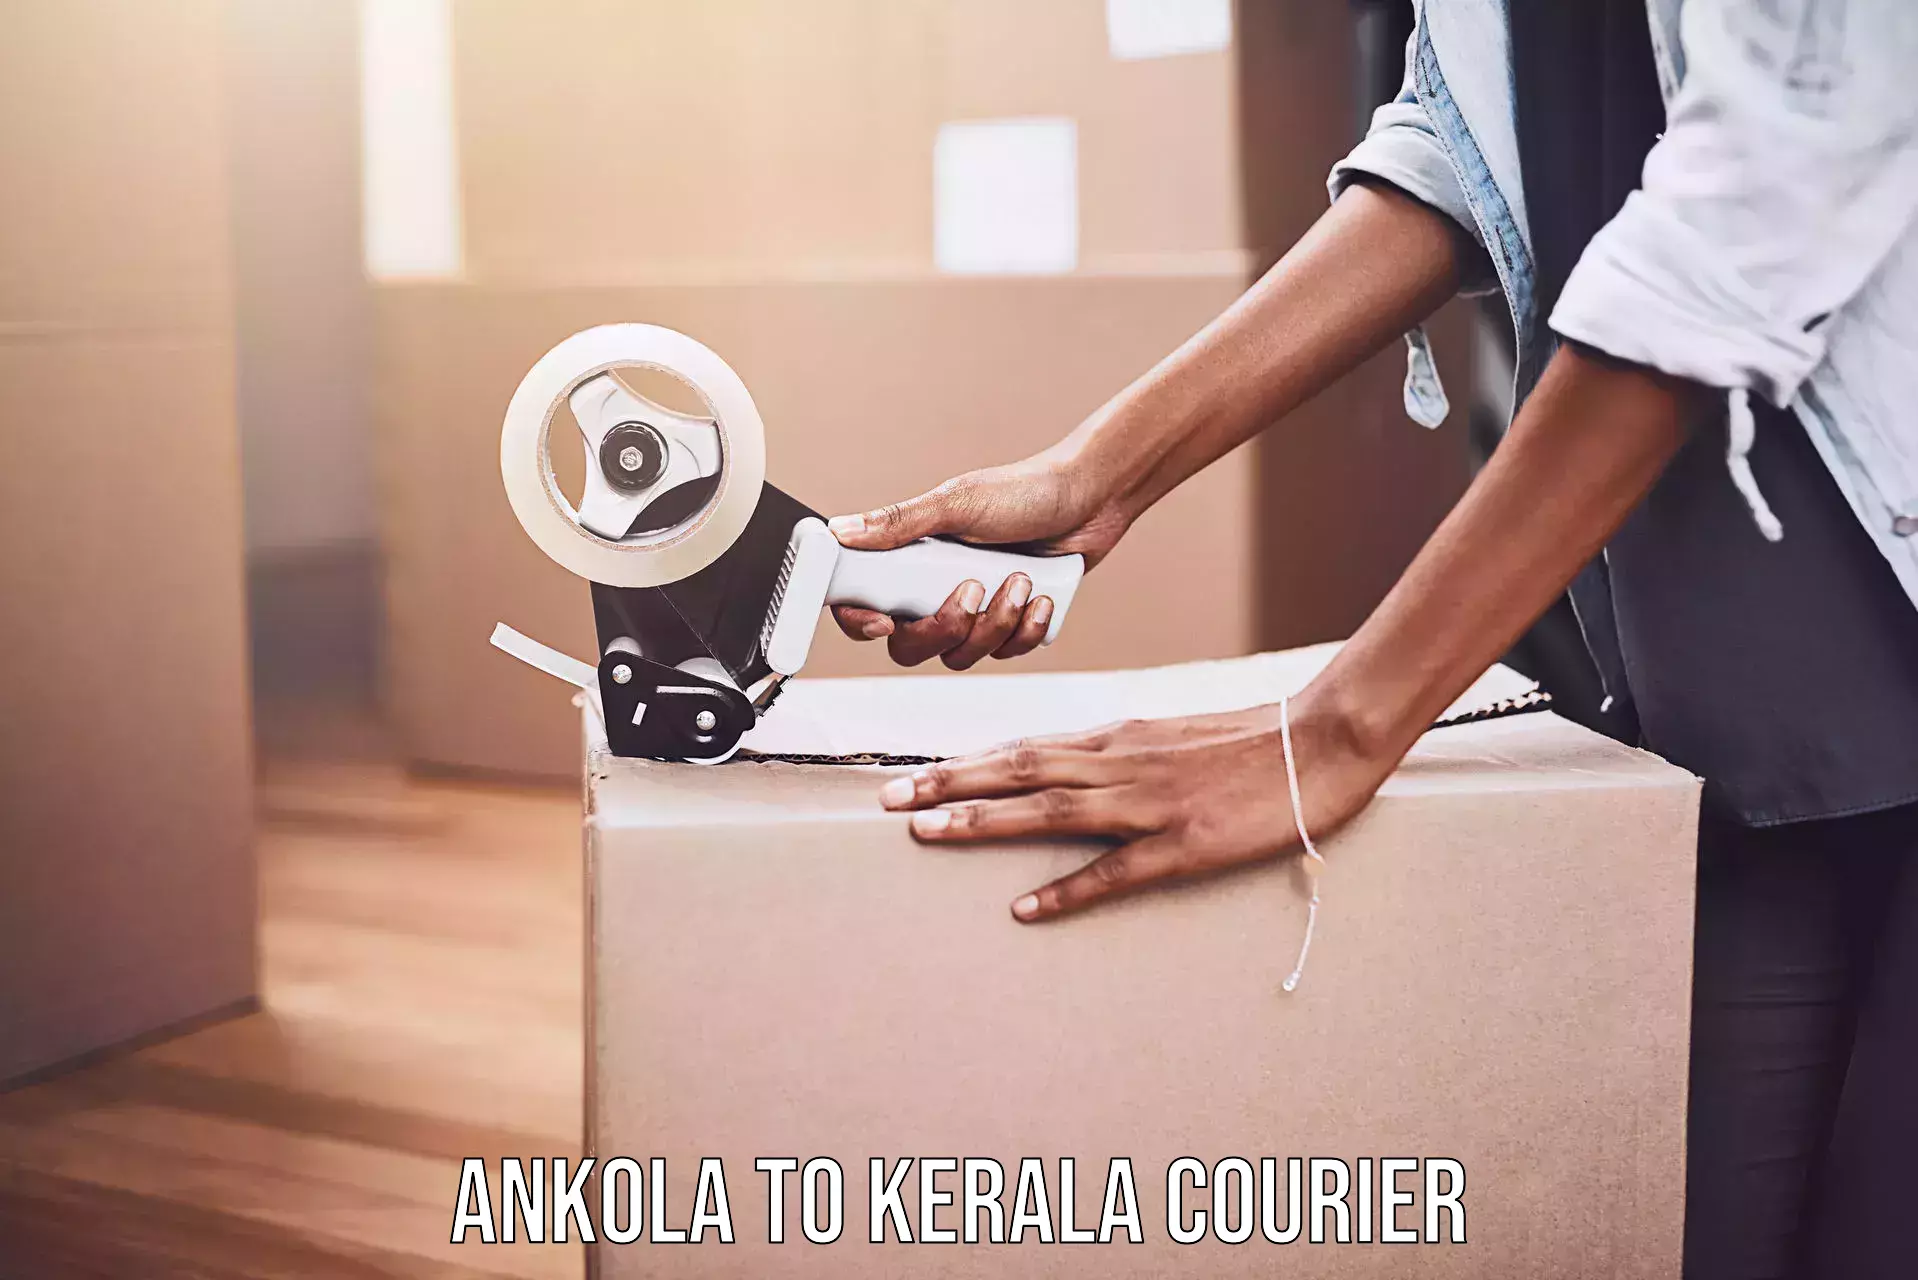 Advanced tracking systems in Ankola to Kerala